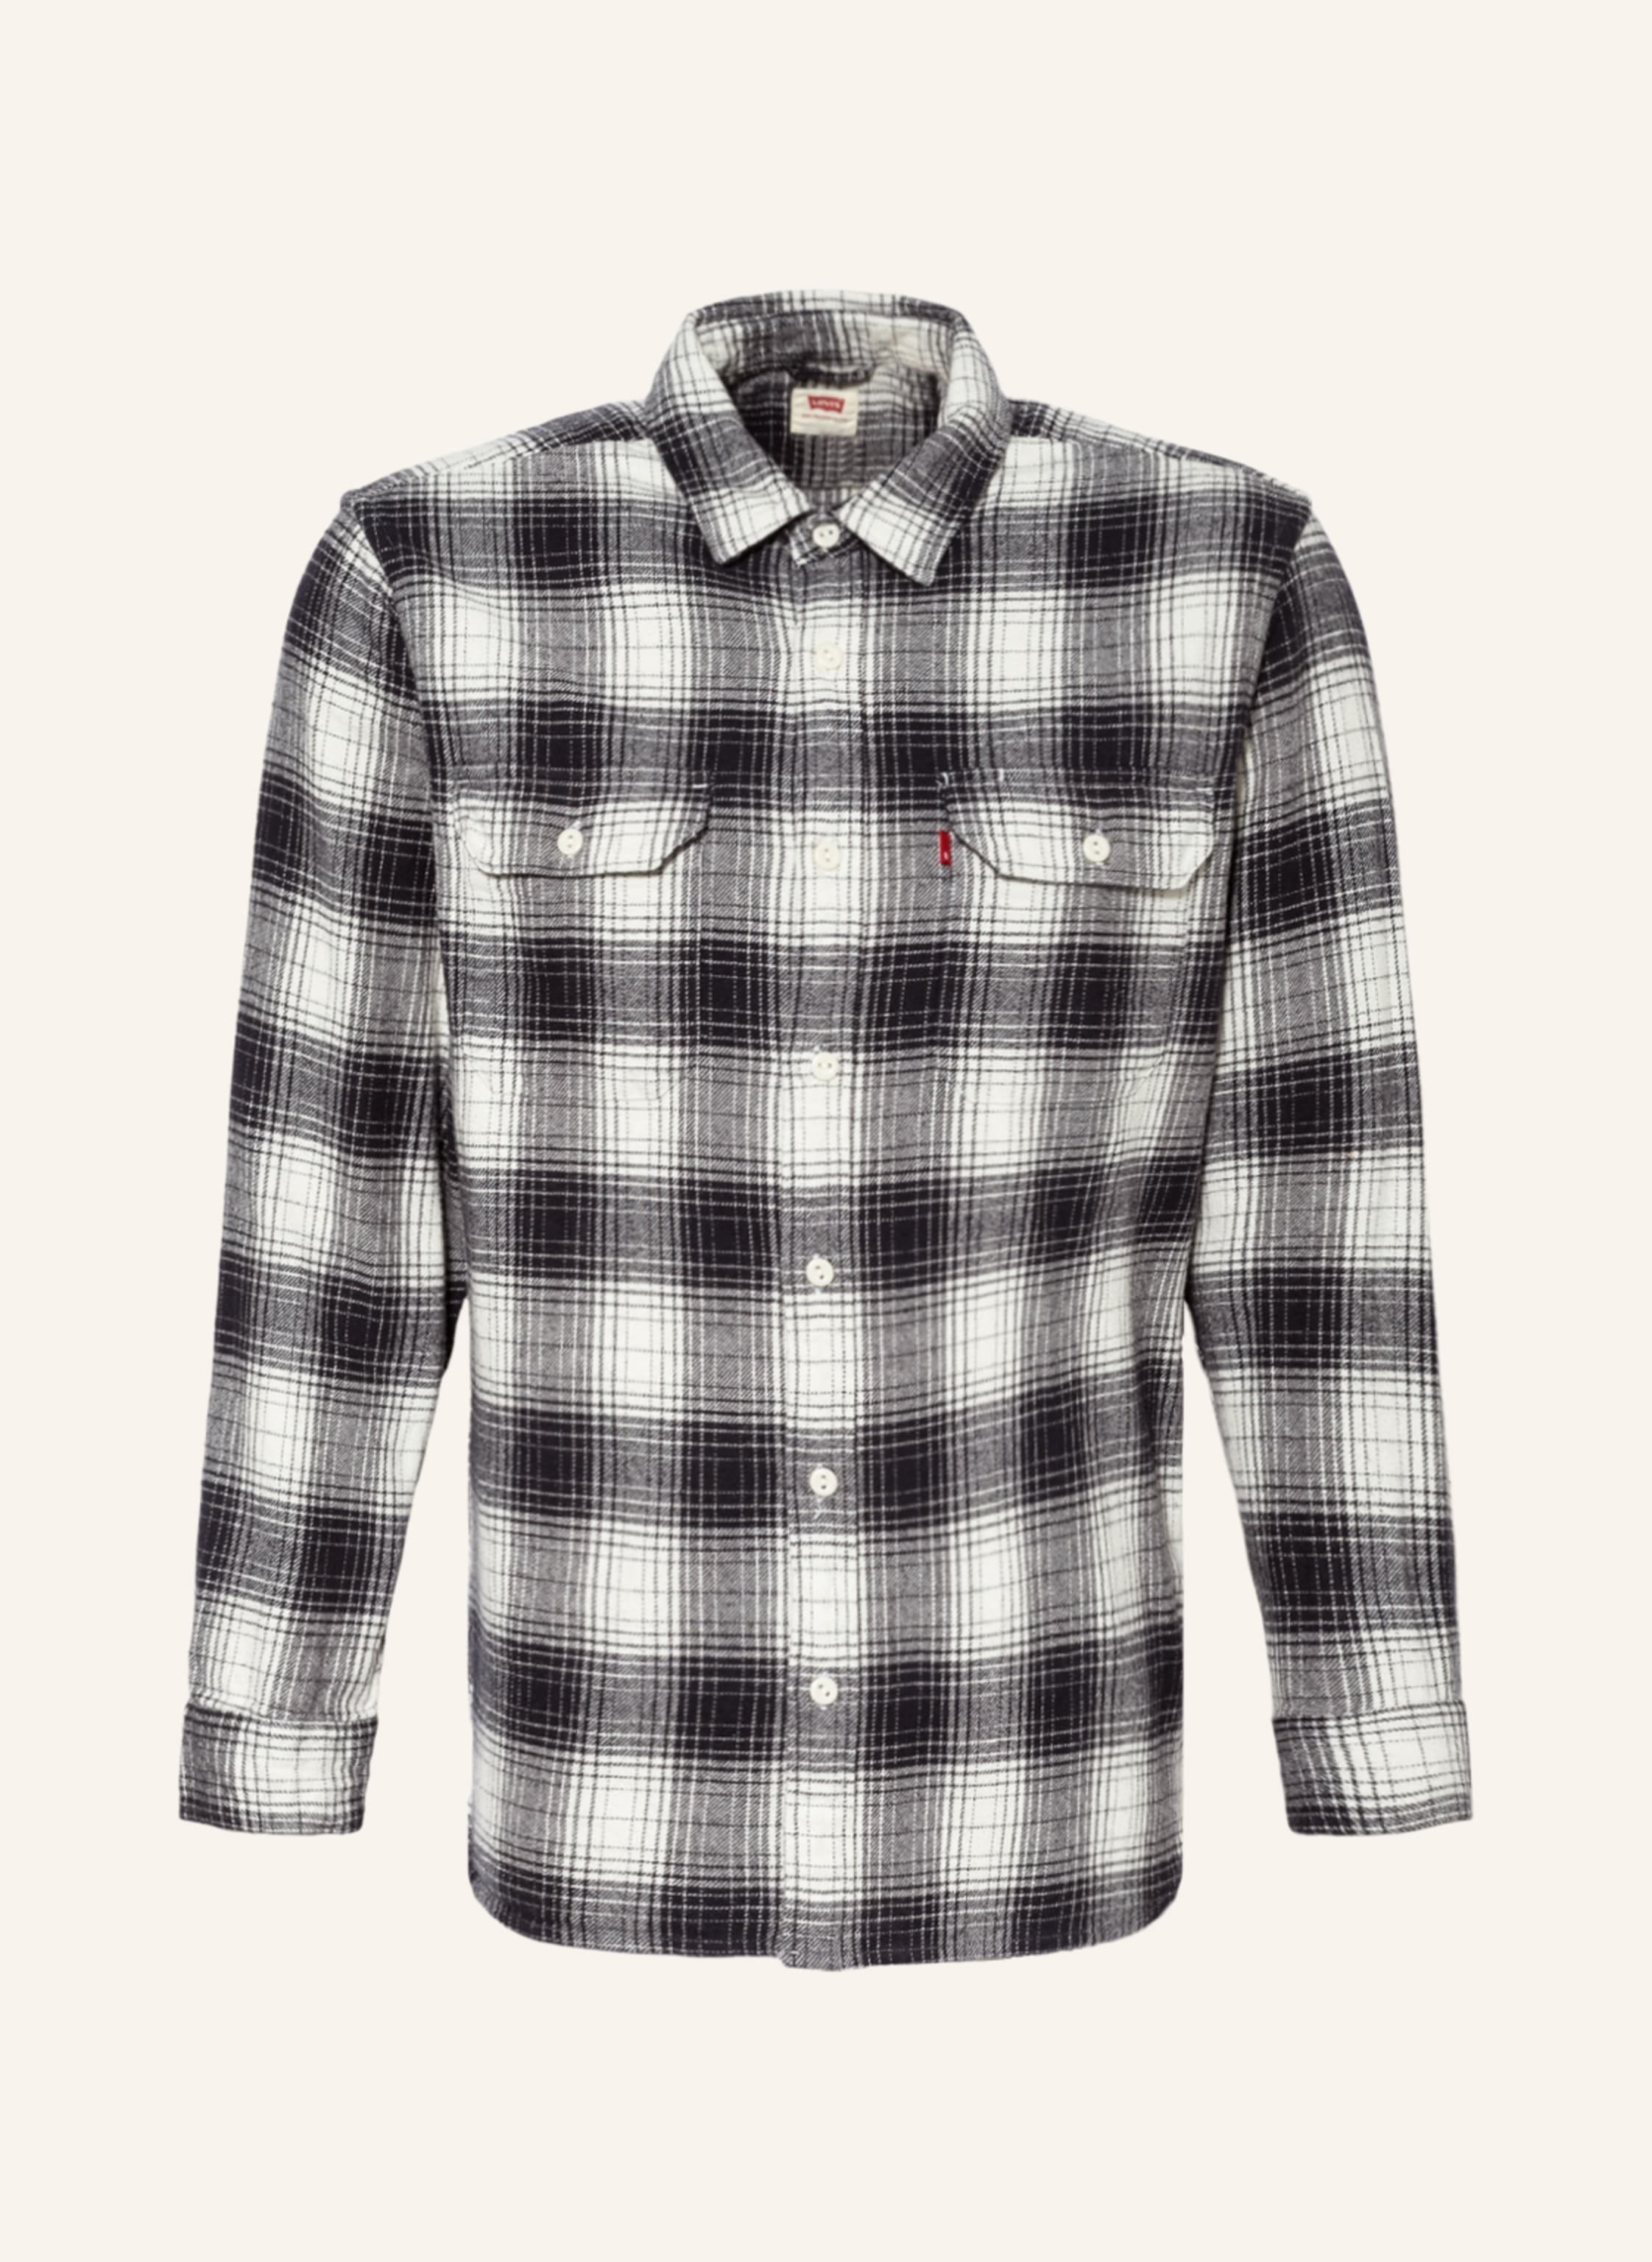 Levi's® Flannel shirt JACKSON relaxed fit in white/ dark blue | Breuninger